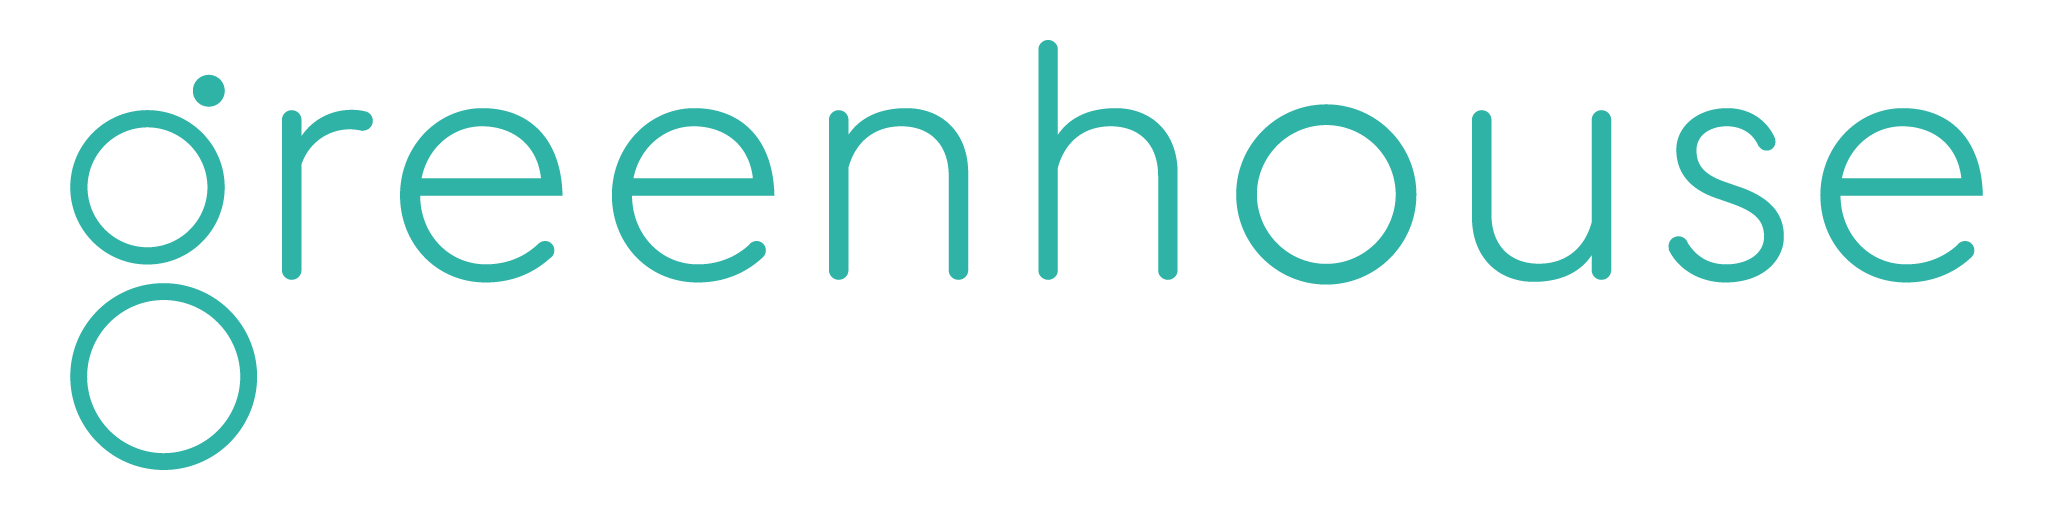 greenhouse logo.png